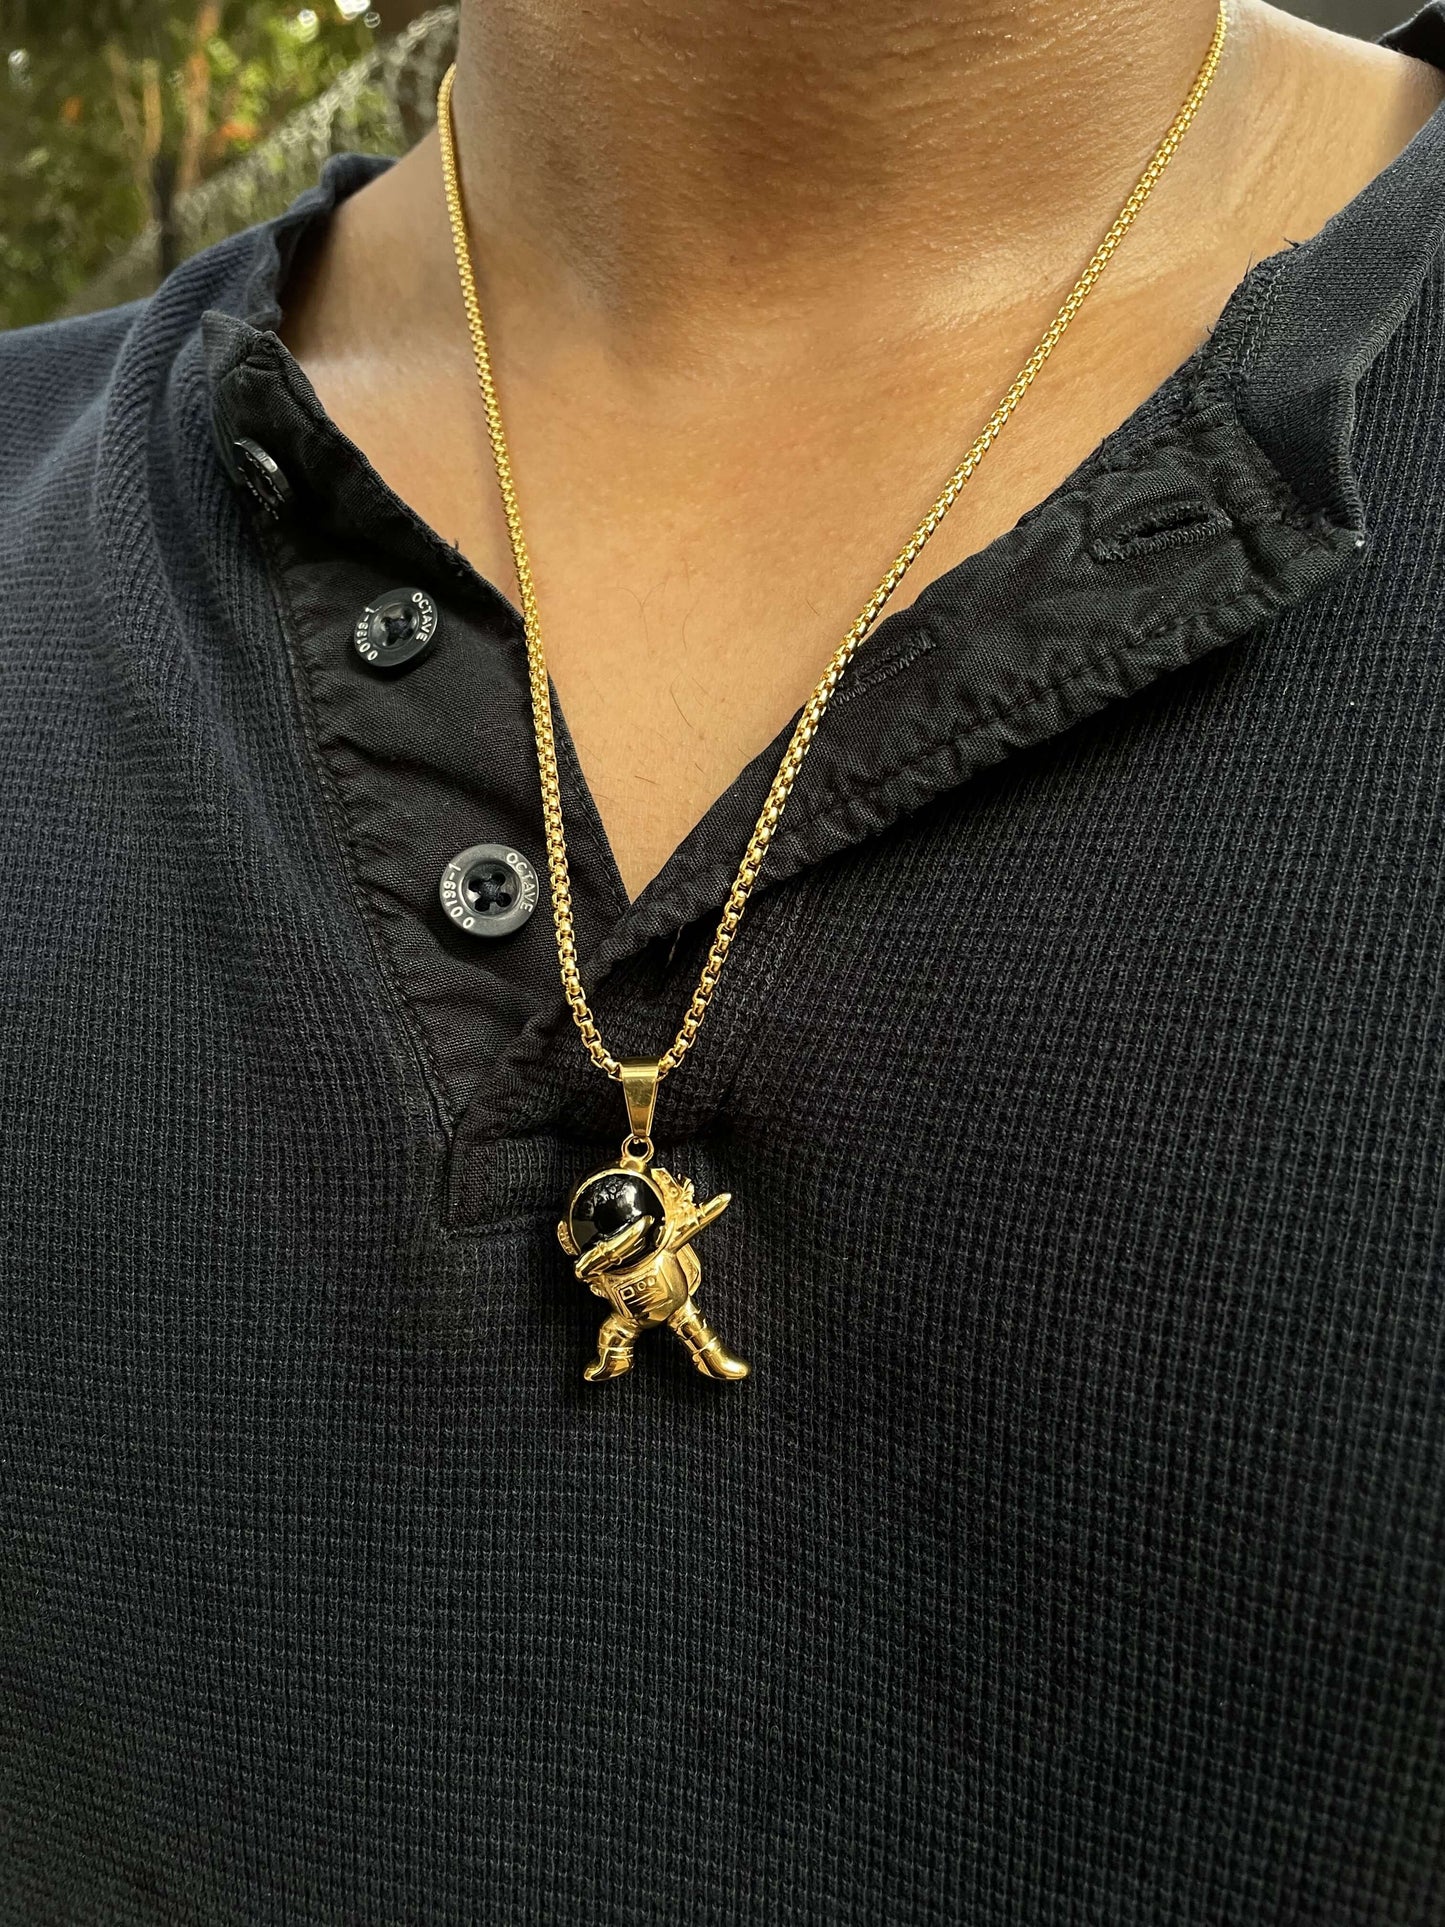 Gold Astronaut Necklace for Men